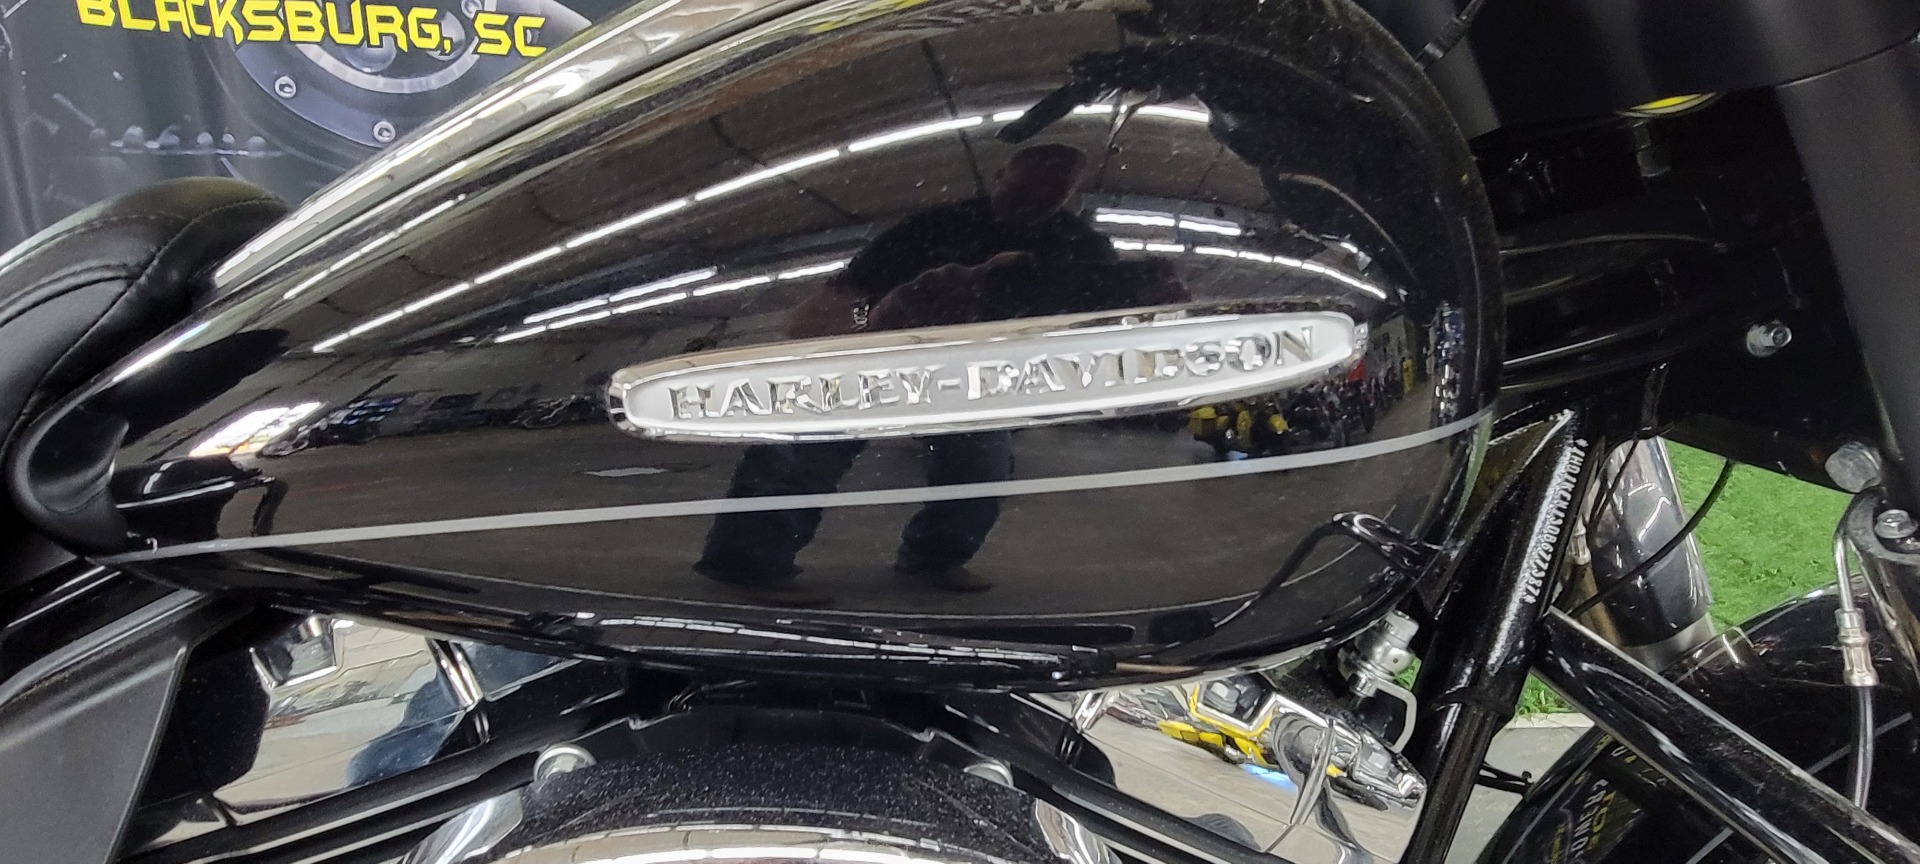 2013 Harley-Davidson Electra Glide® Ultra Limited in Blacksburg, South Carolina - Photo 10